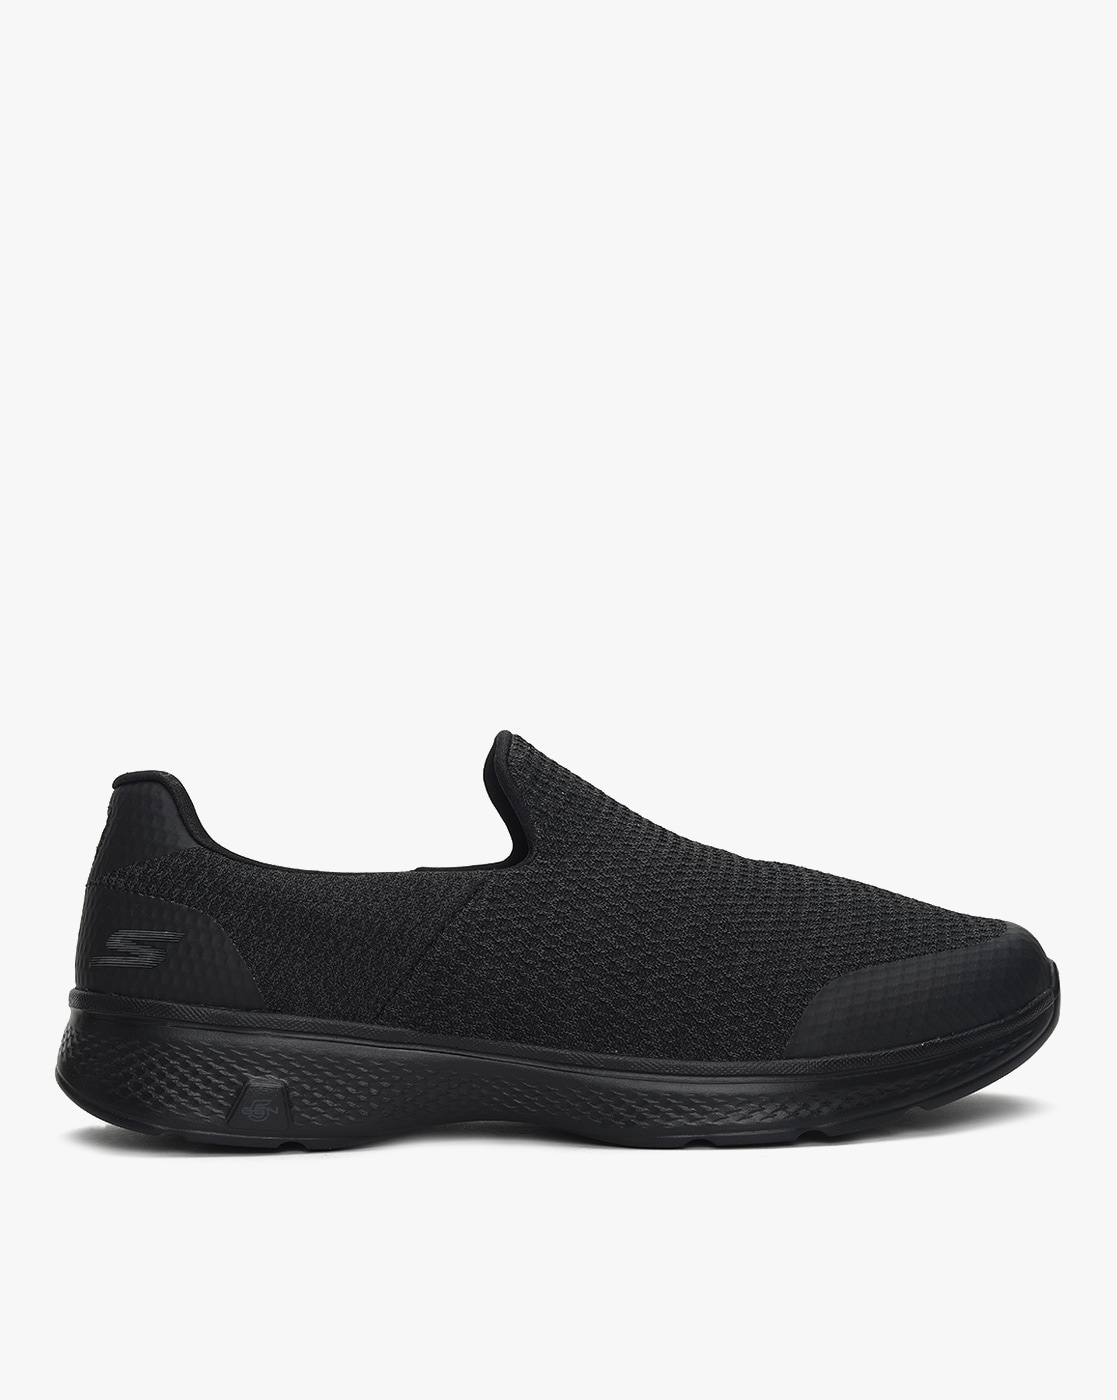 Black Sports Shoes for Men by Skechers Online